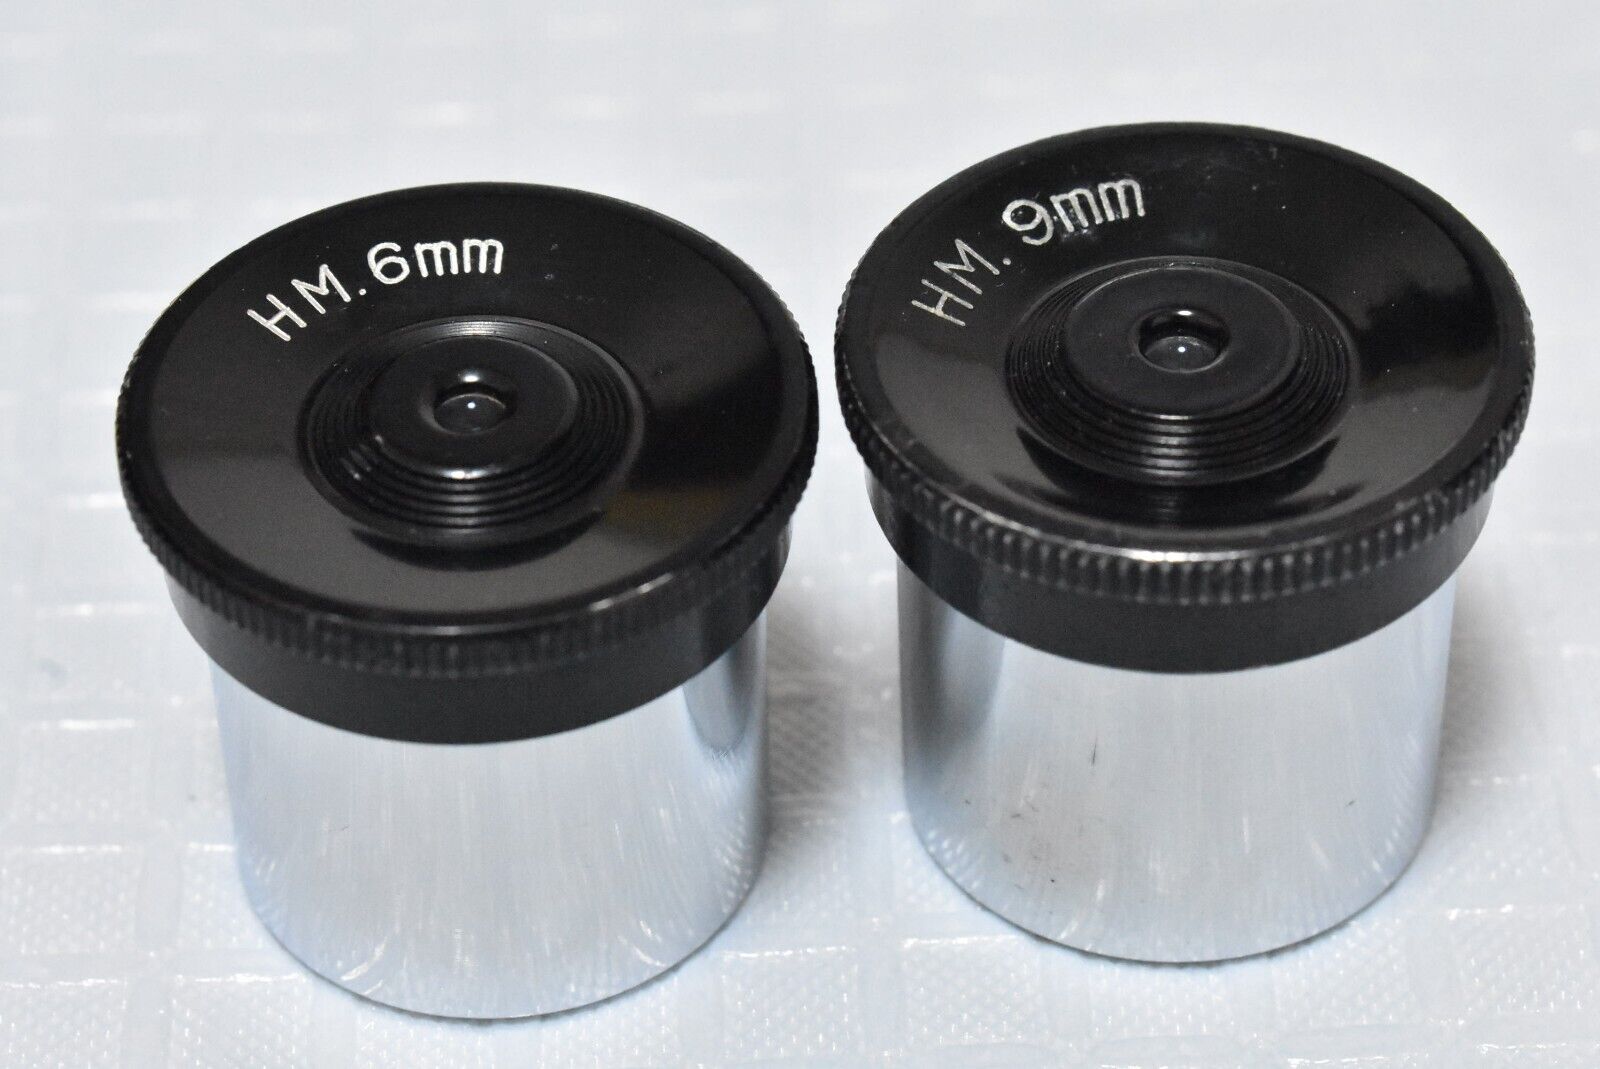 Brandless (tani?) Eyepiece Hm.9mm Hm.6mm Barrel 0.96"/24.5mm